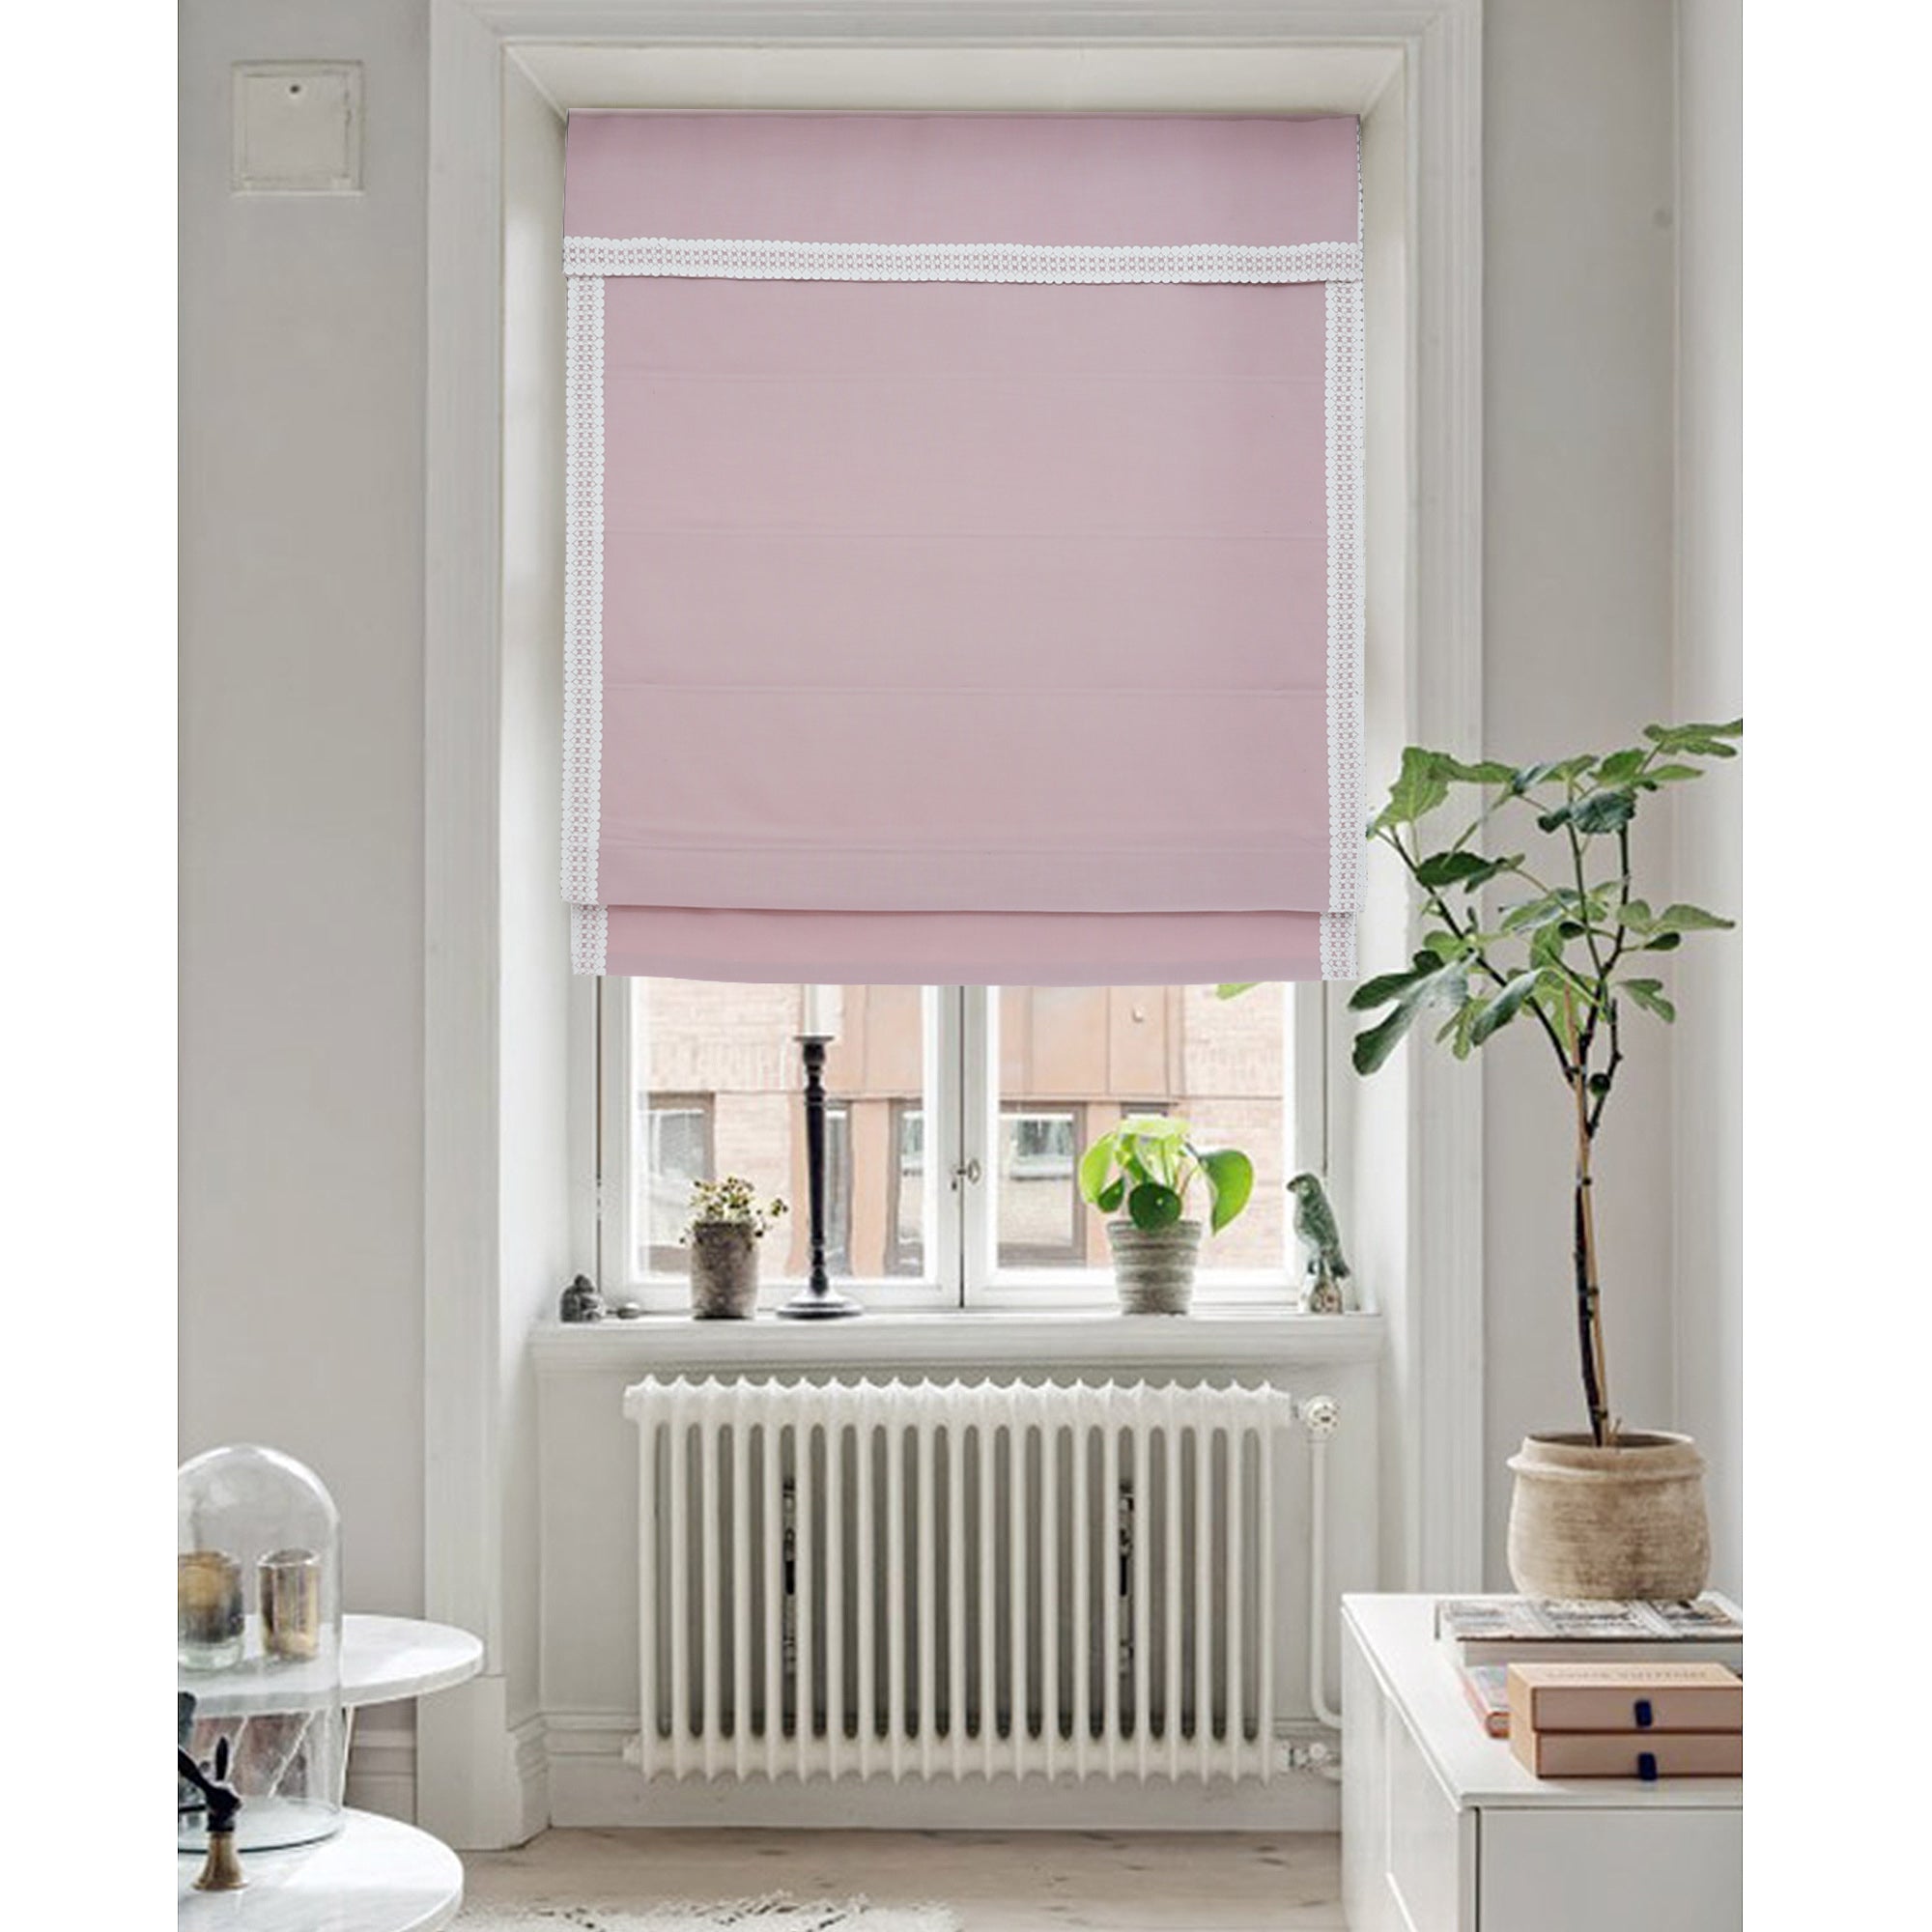 Quick Fix Washable Roman Window Shades Flat Fold with Valance - Pink SG-097